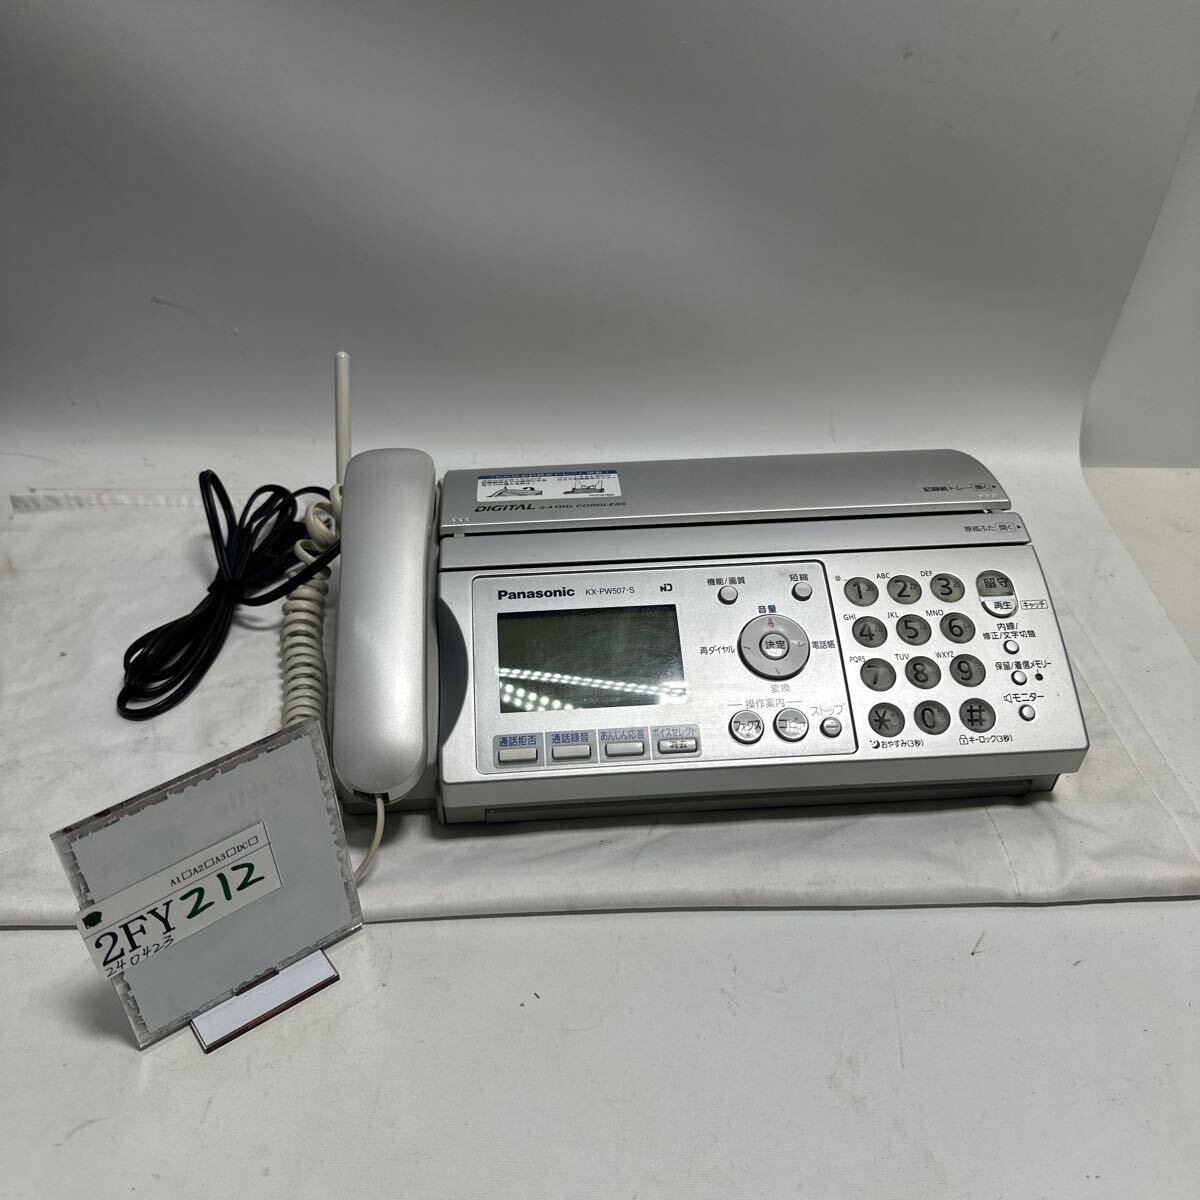 [2FY212]Panasonic/ Panasonic telephone machine parent machine cordless handset less FAX fax .....KX-PW507-S present condition body only (240423)